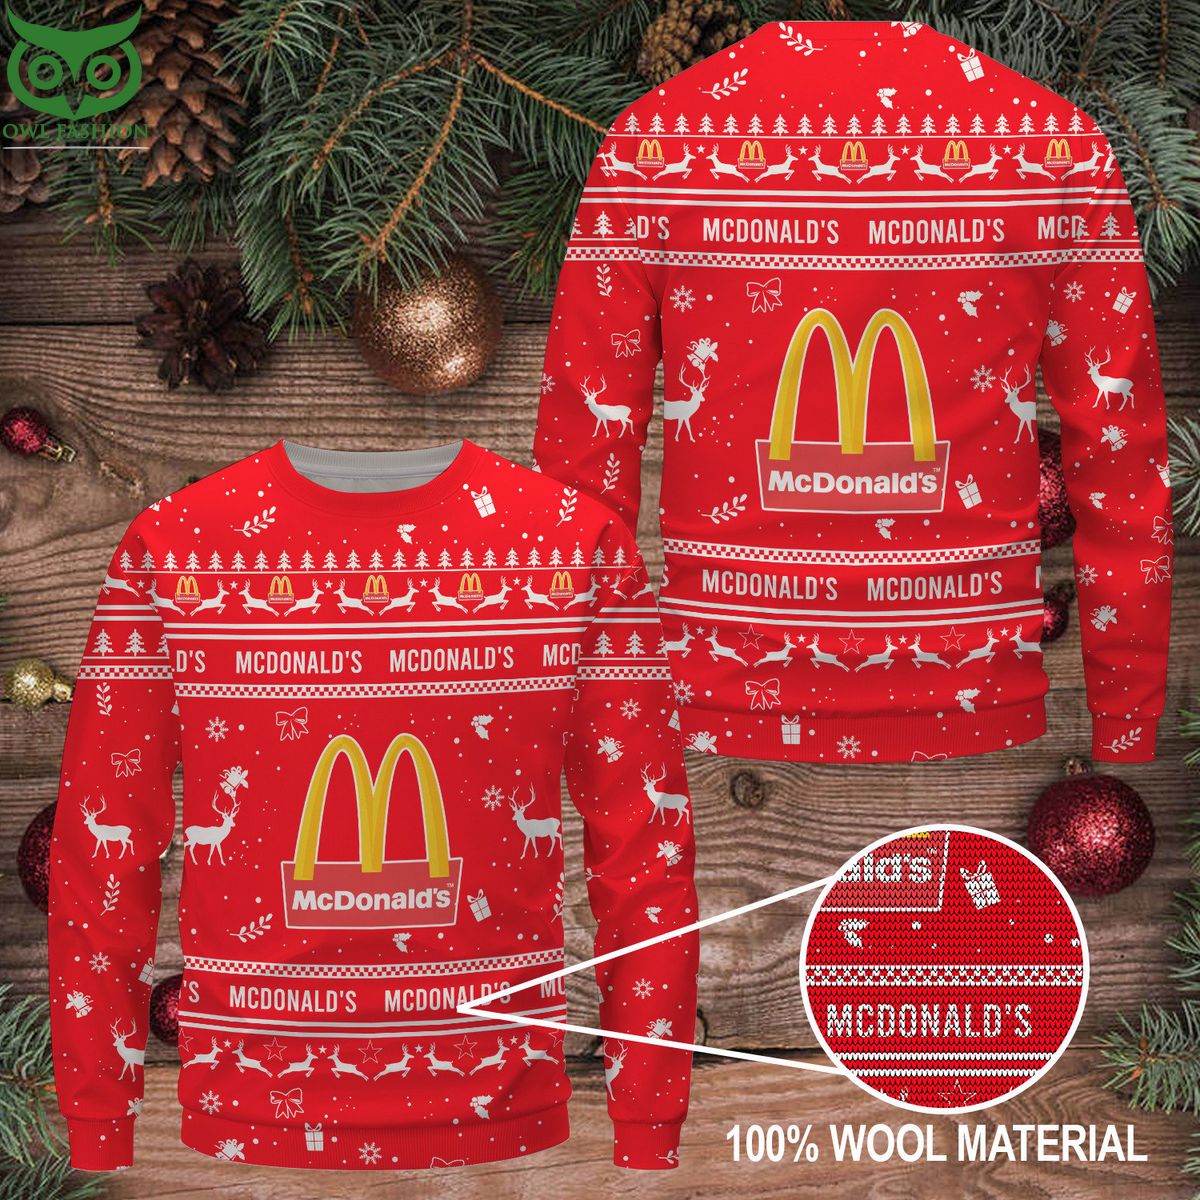 Mcdonald's Premium Ugly Christmas Sweater